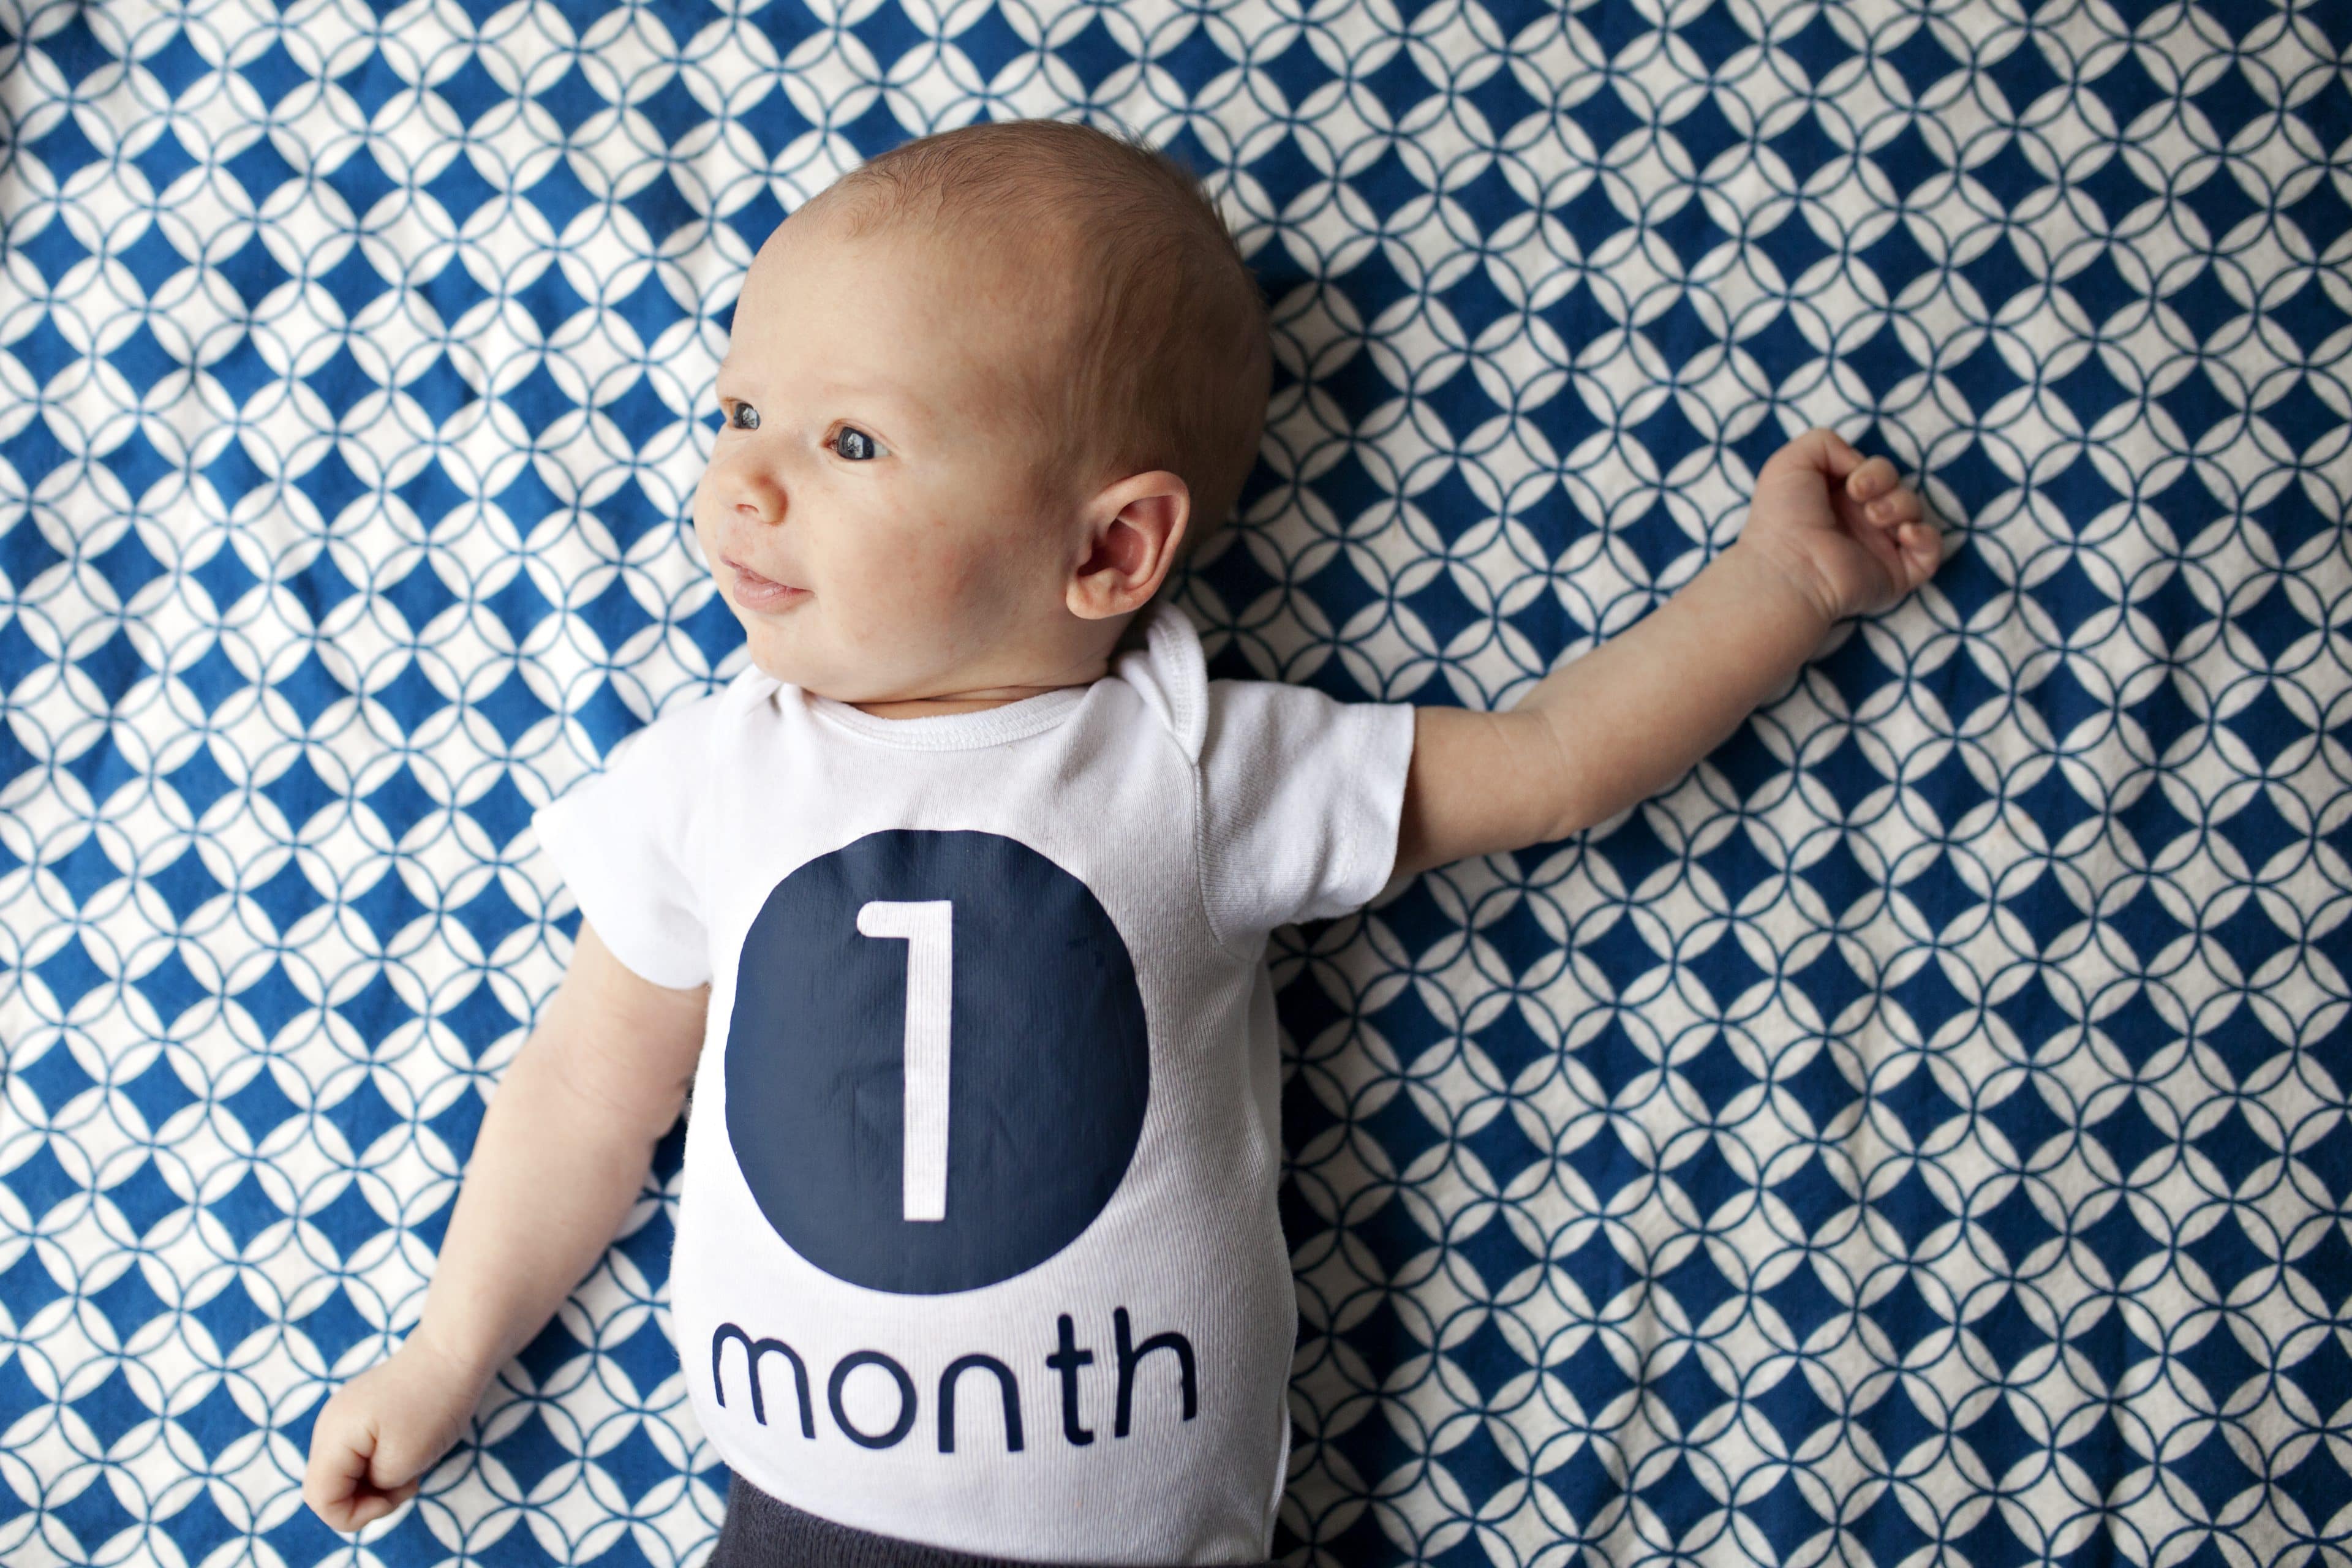 Baby Boy Wearing A One Month Old Shirt Lying On A Awp9D6J Scaled مجلة نقطة العلمية